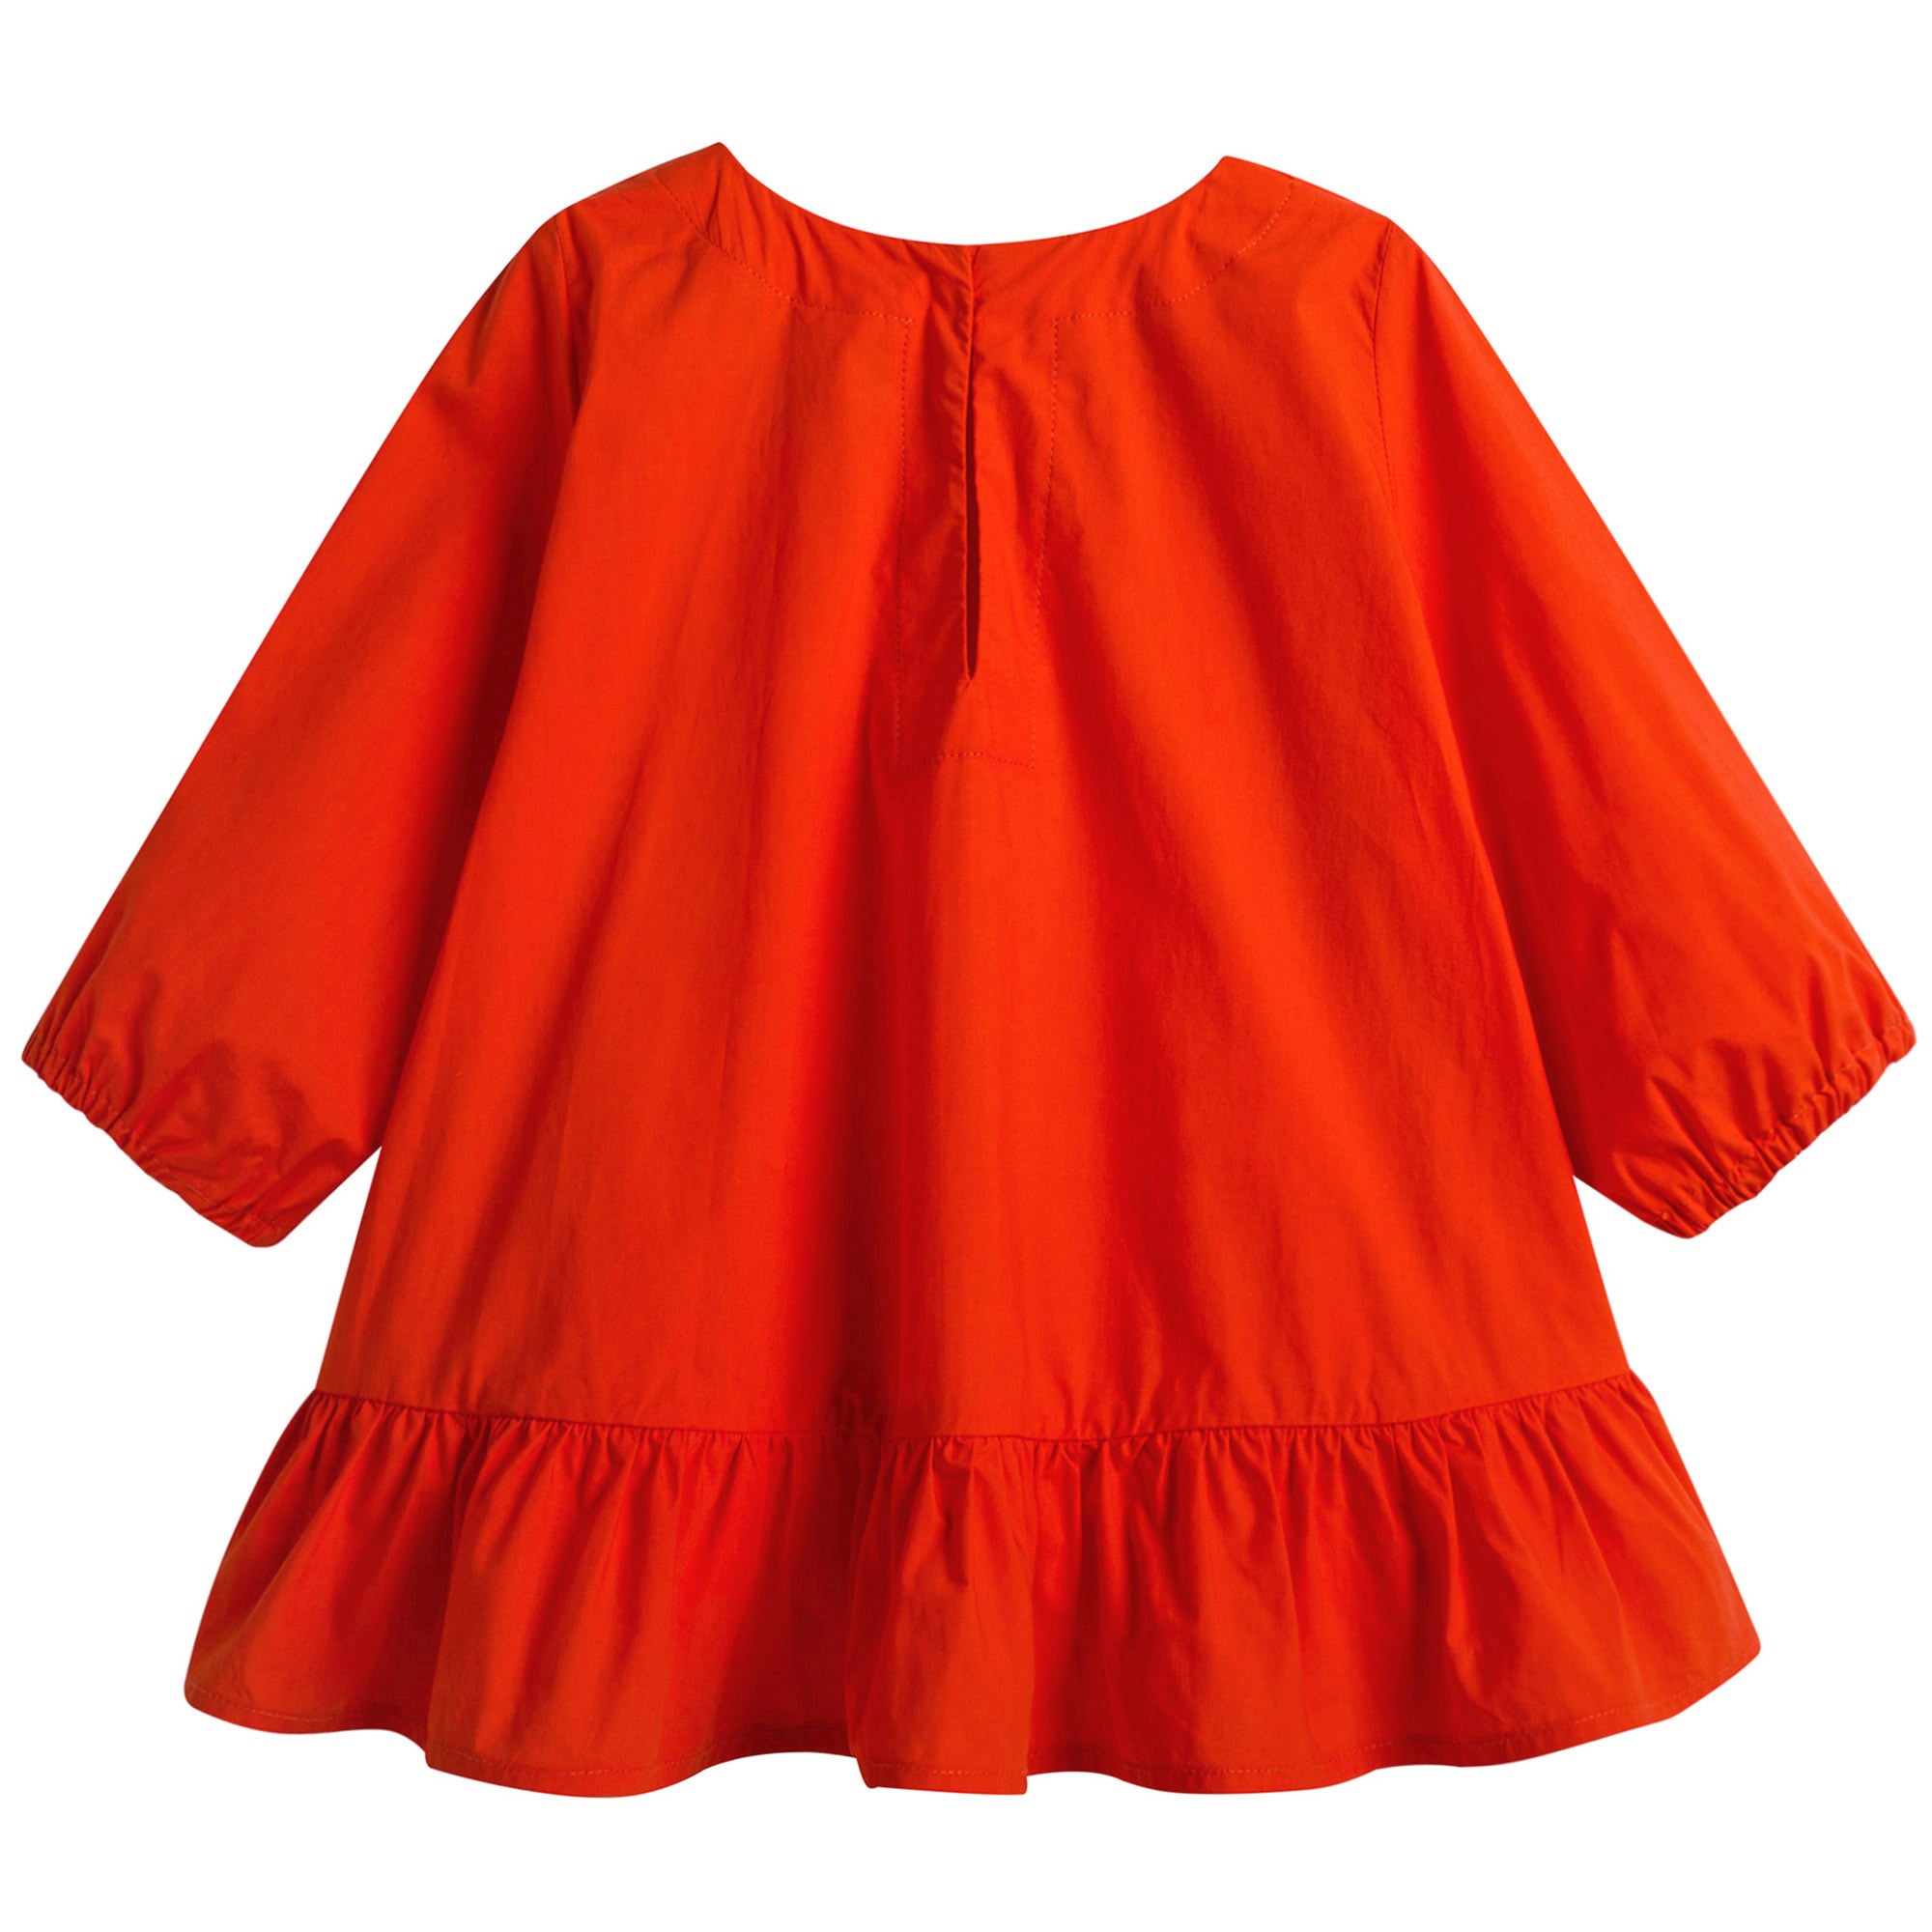 Girls Orange Cotton Top With Flounces